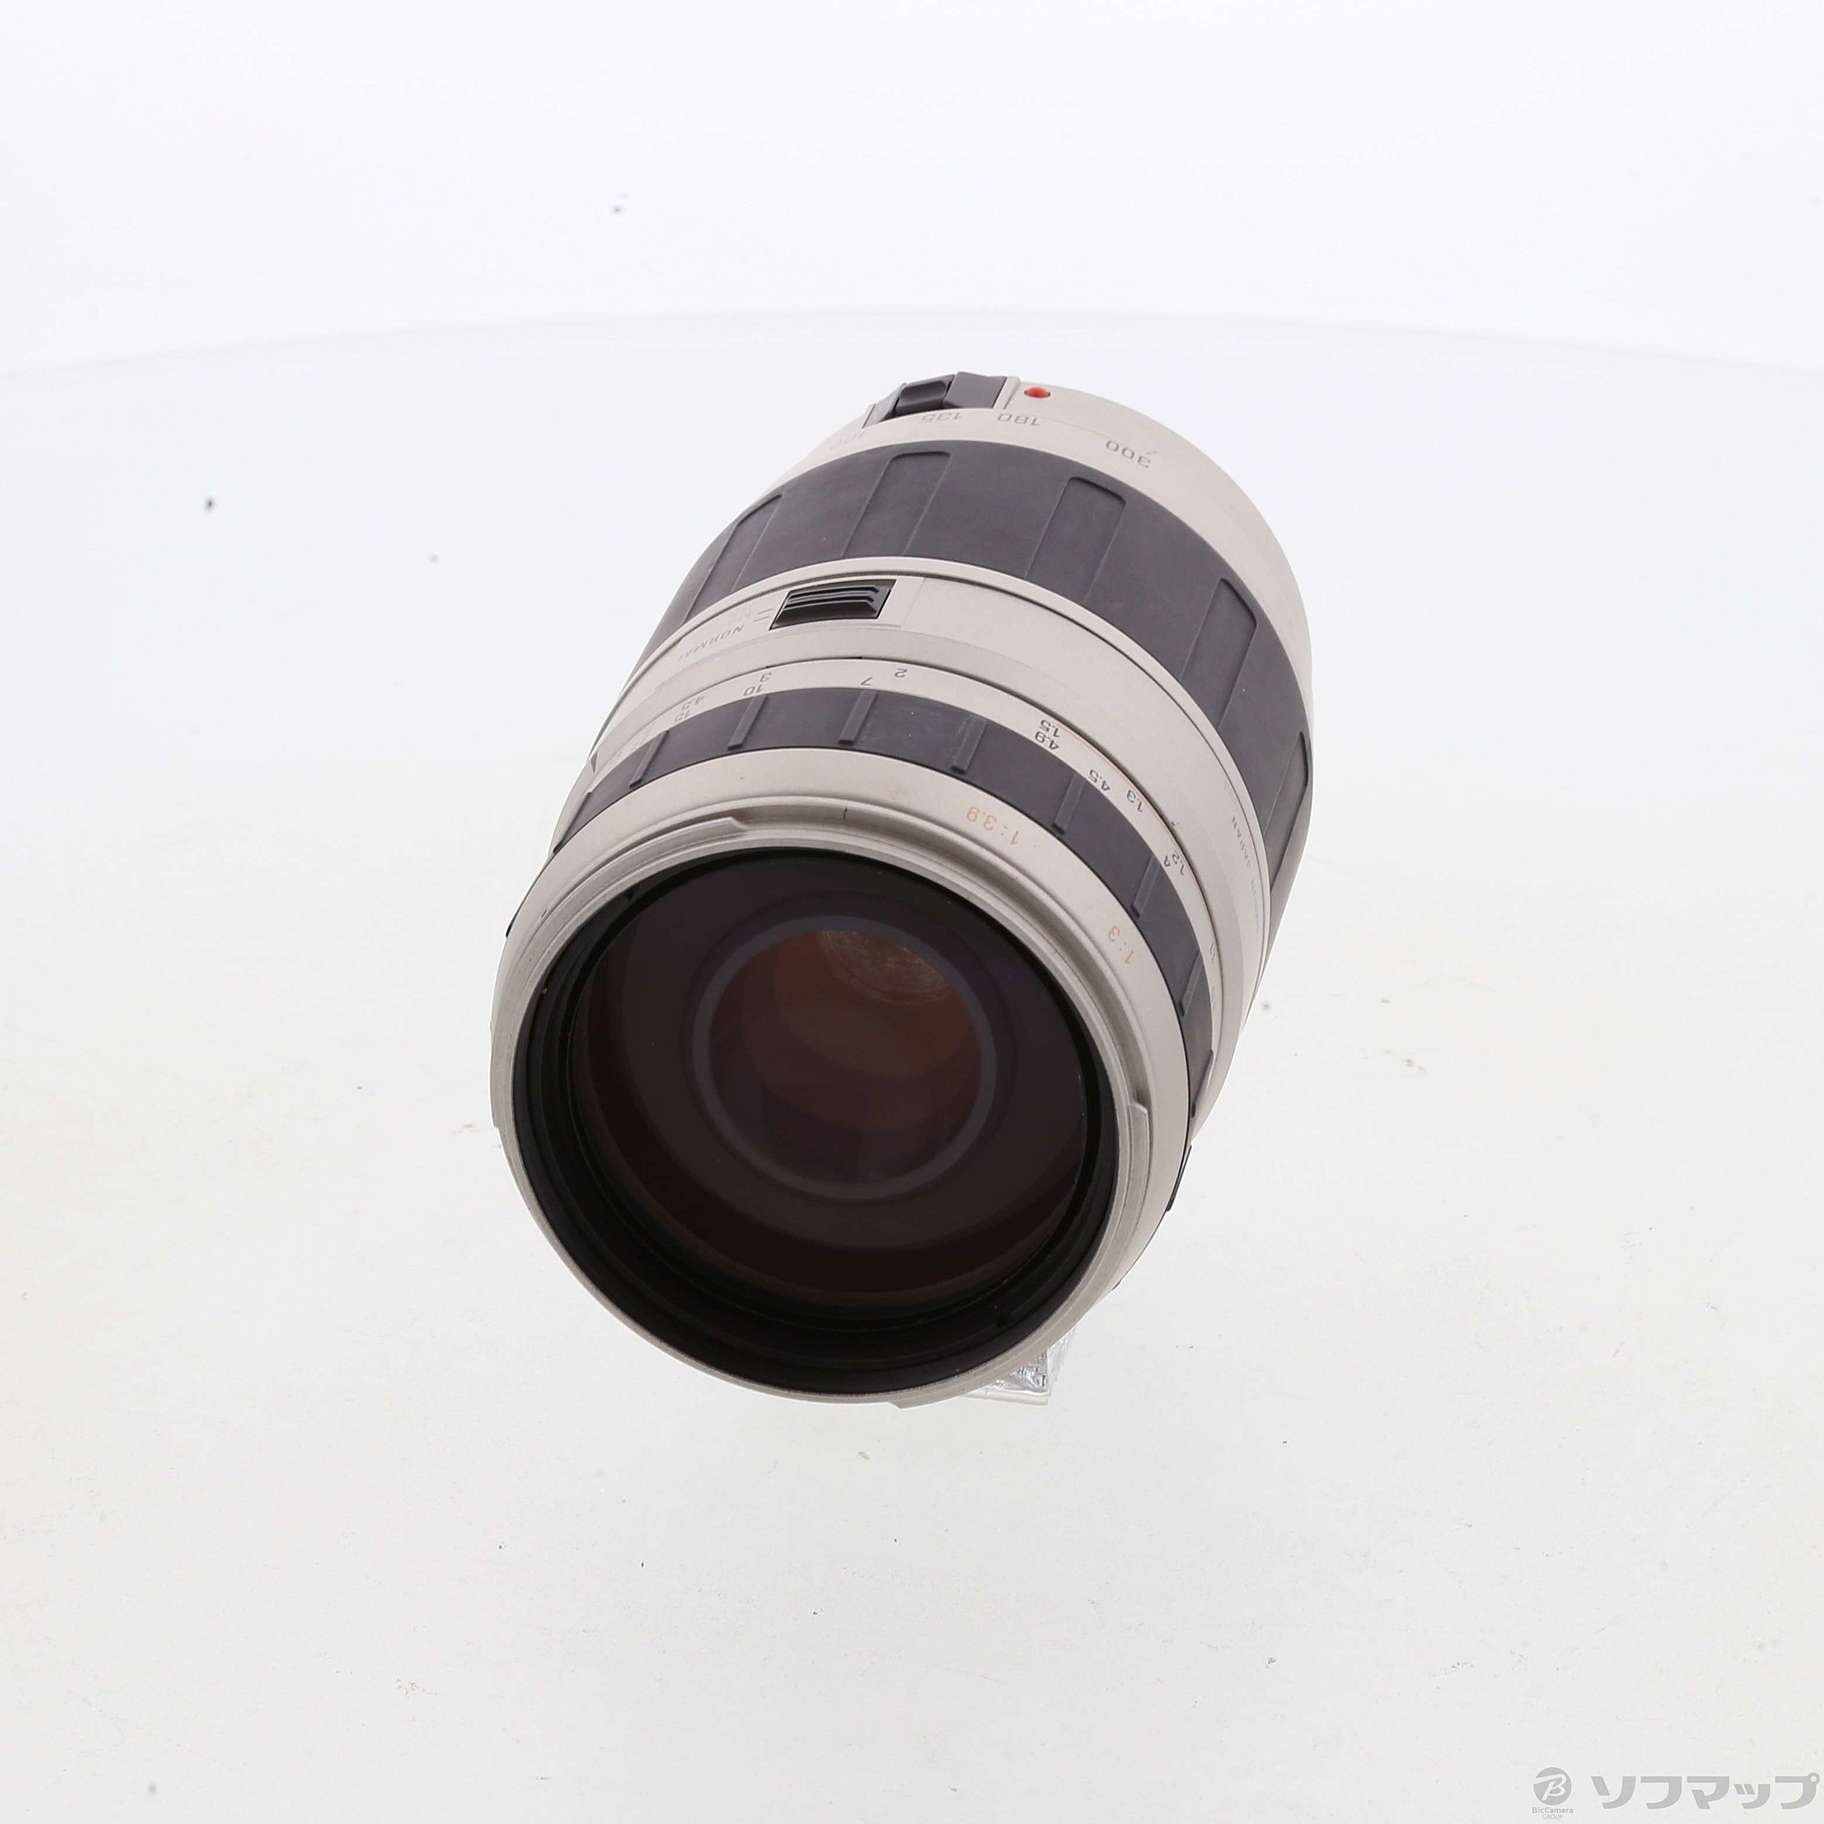 中古】セール対象品 TAMRON AF 70-300mm F4-5.6LD MACRO 772D Canon用